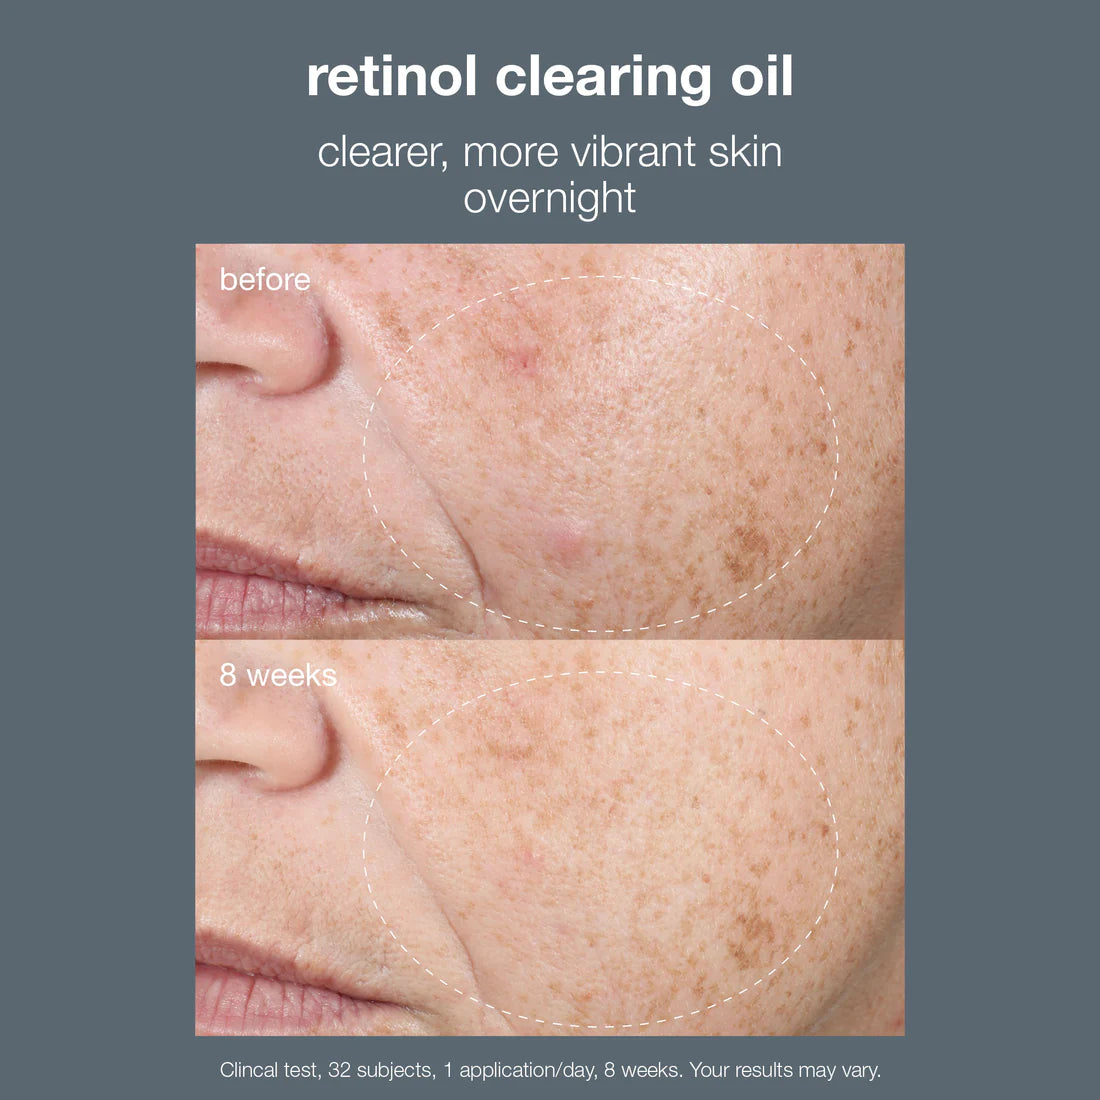 retinol clearing oil